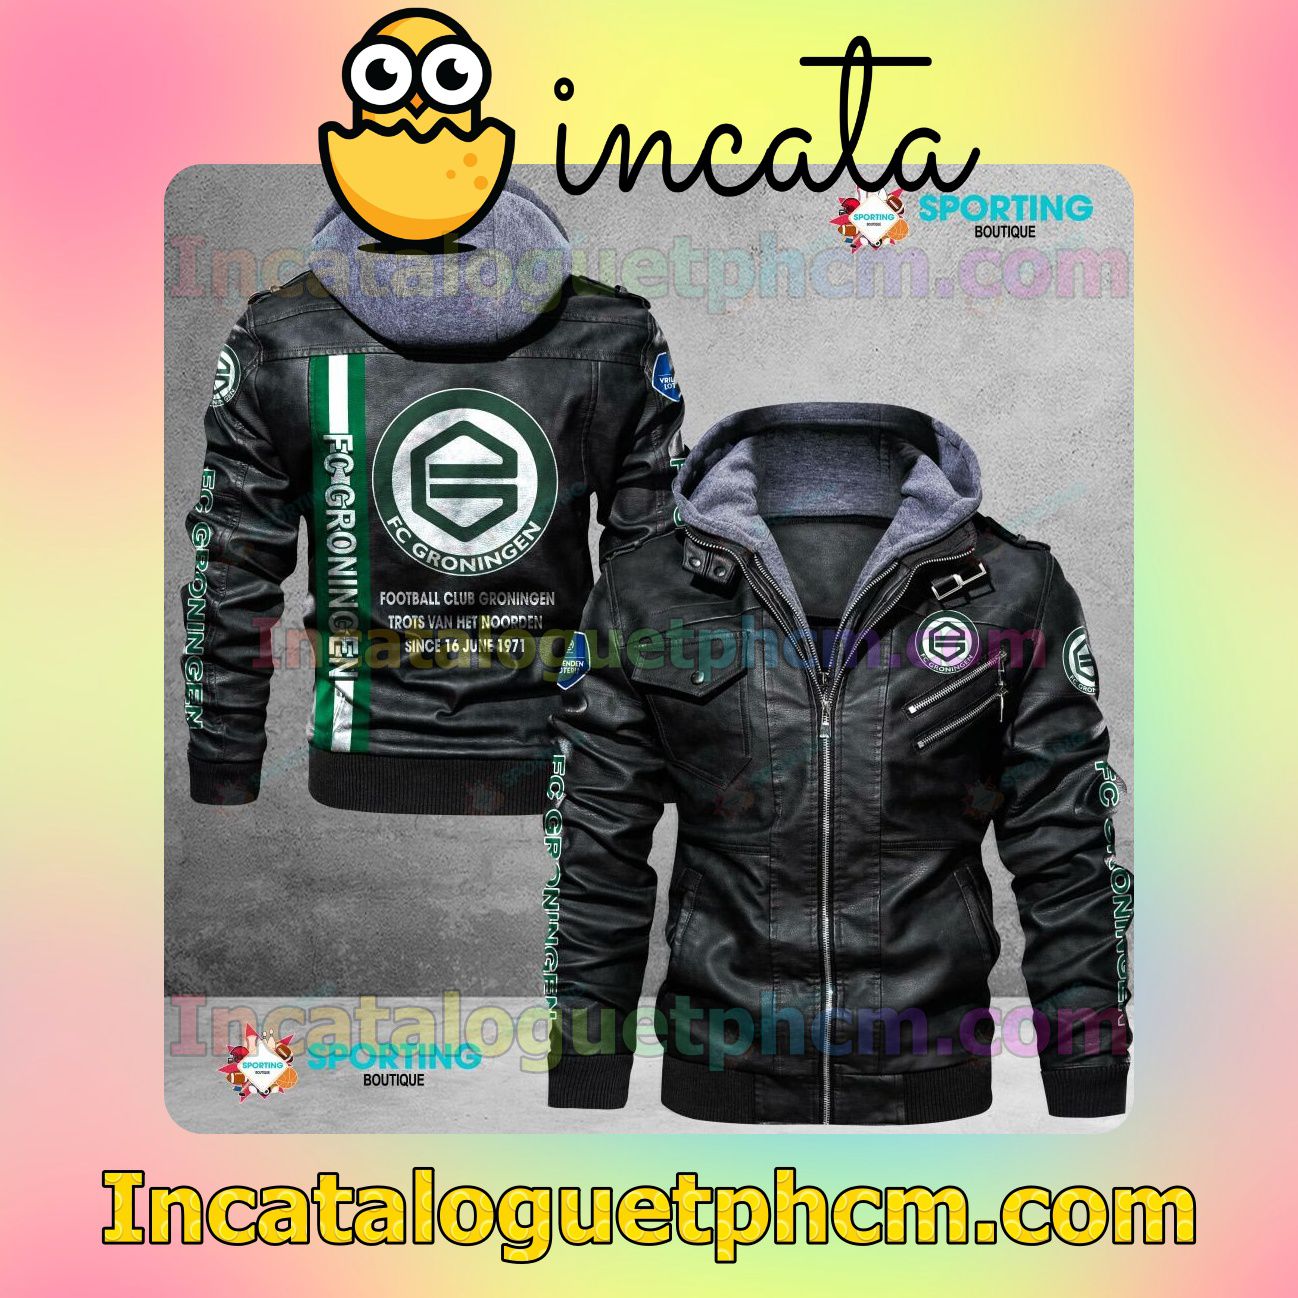 FC Groningen Brand Uniform Leather Jacket